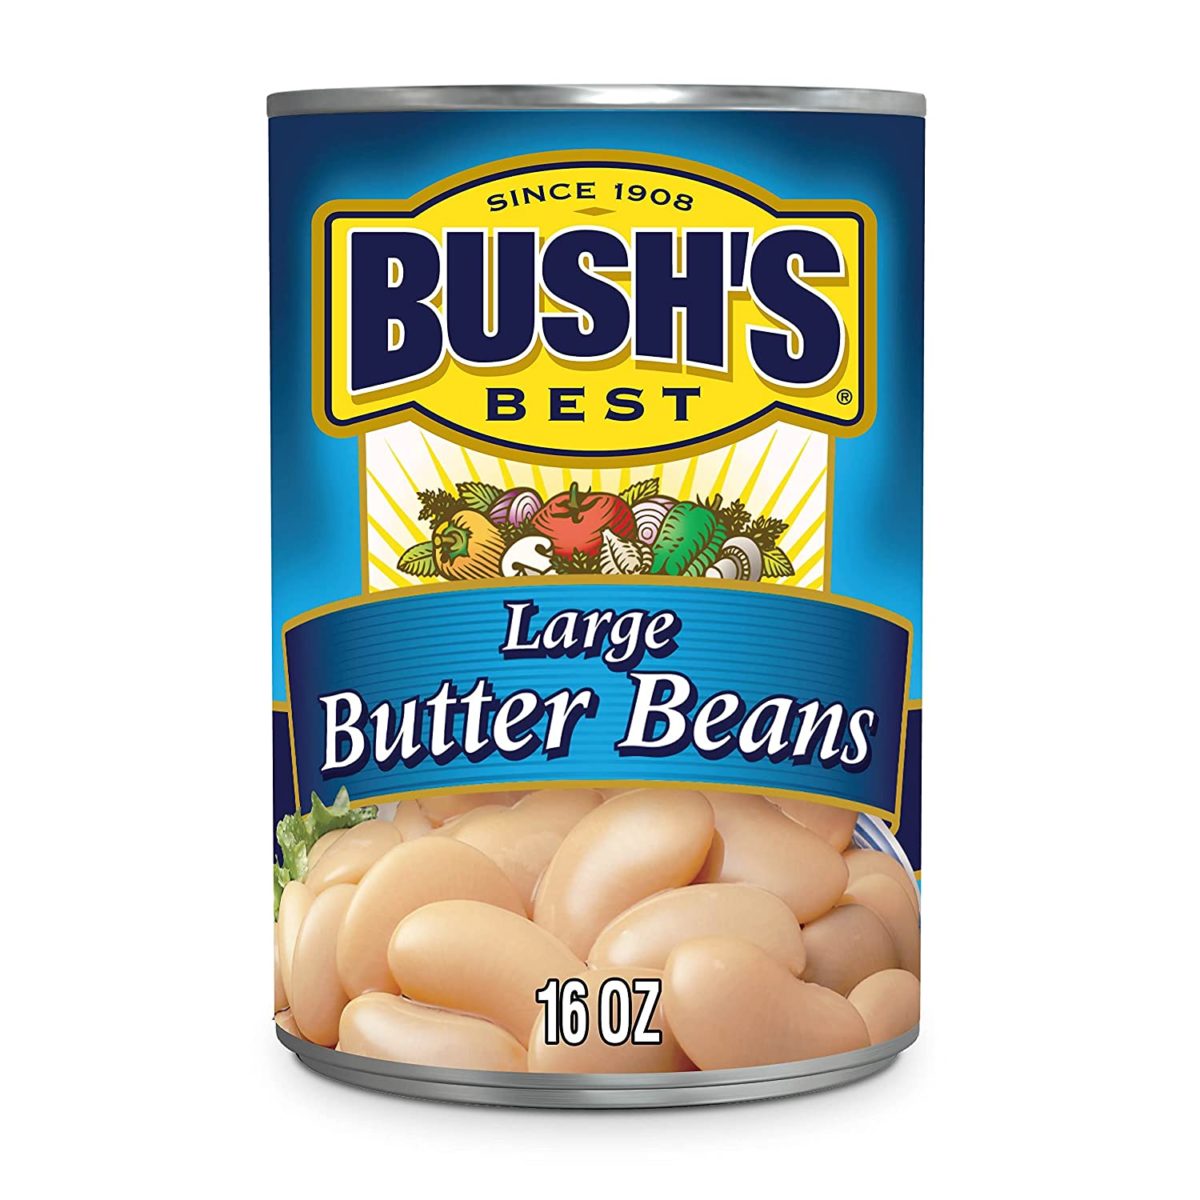 Butter beans as a substitute for adzuki beans